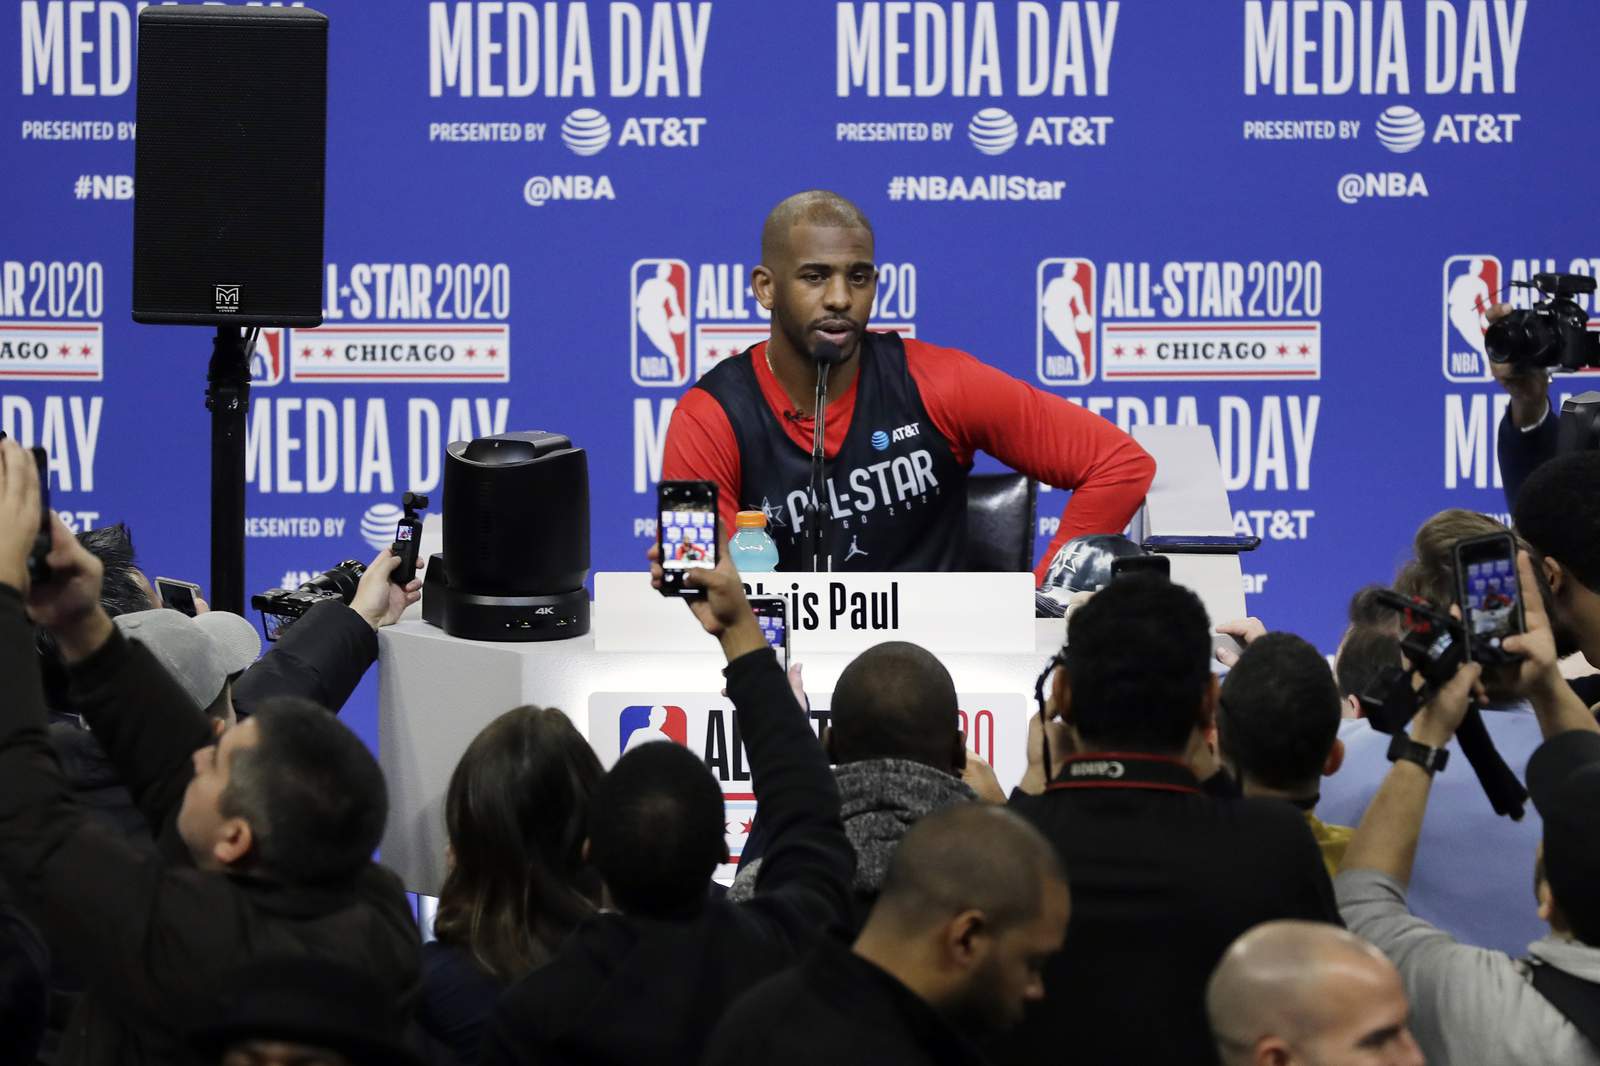 NBA, NBPA say sparking social change will be goal of restart